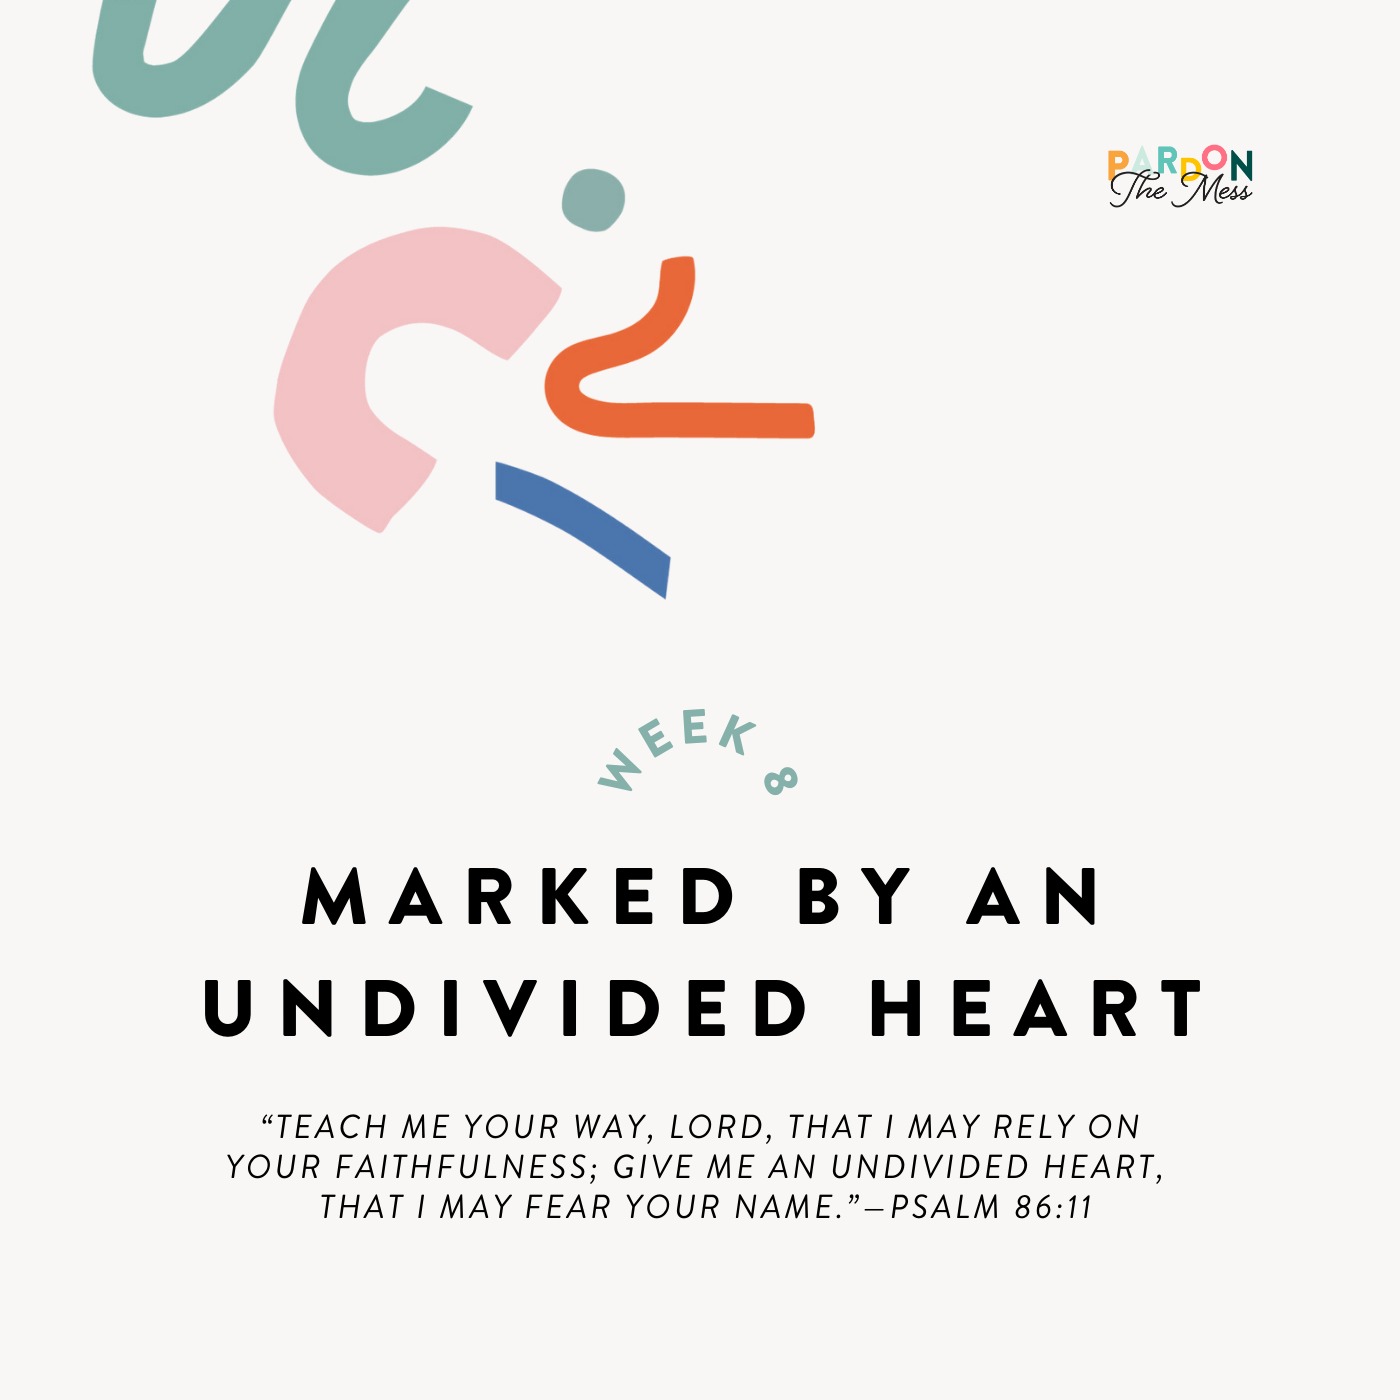 BONUS: Marked by an Undivided Heart